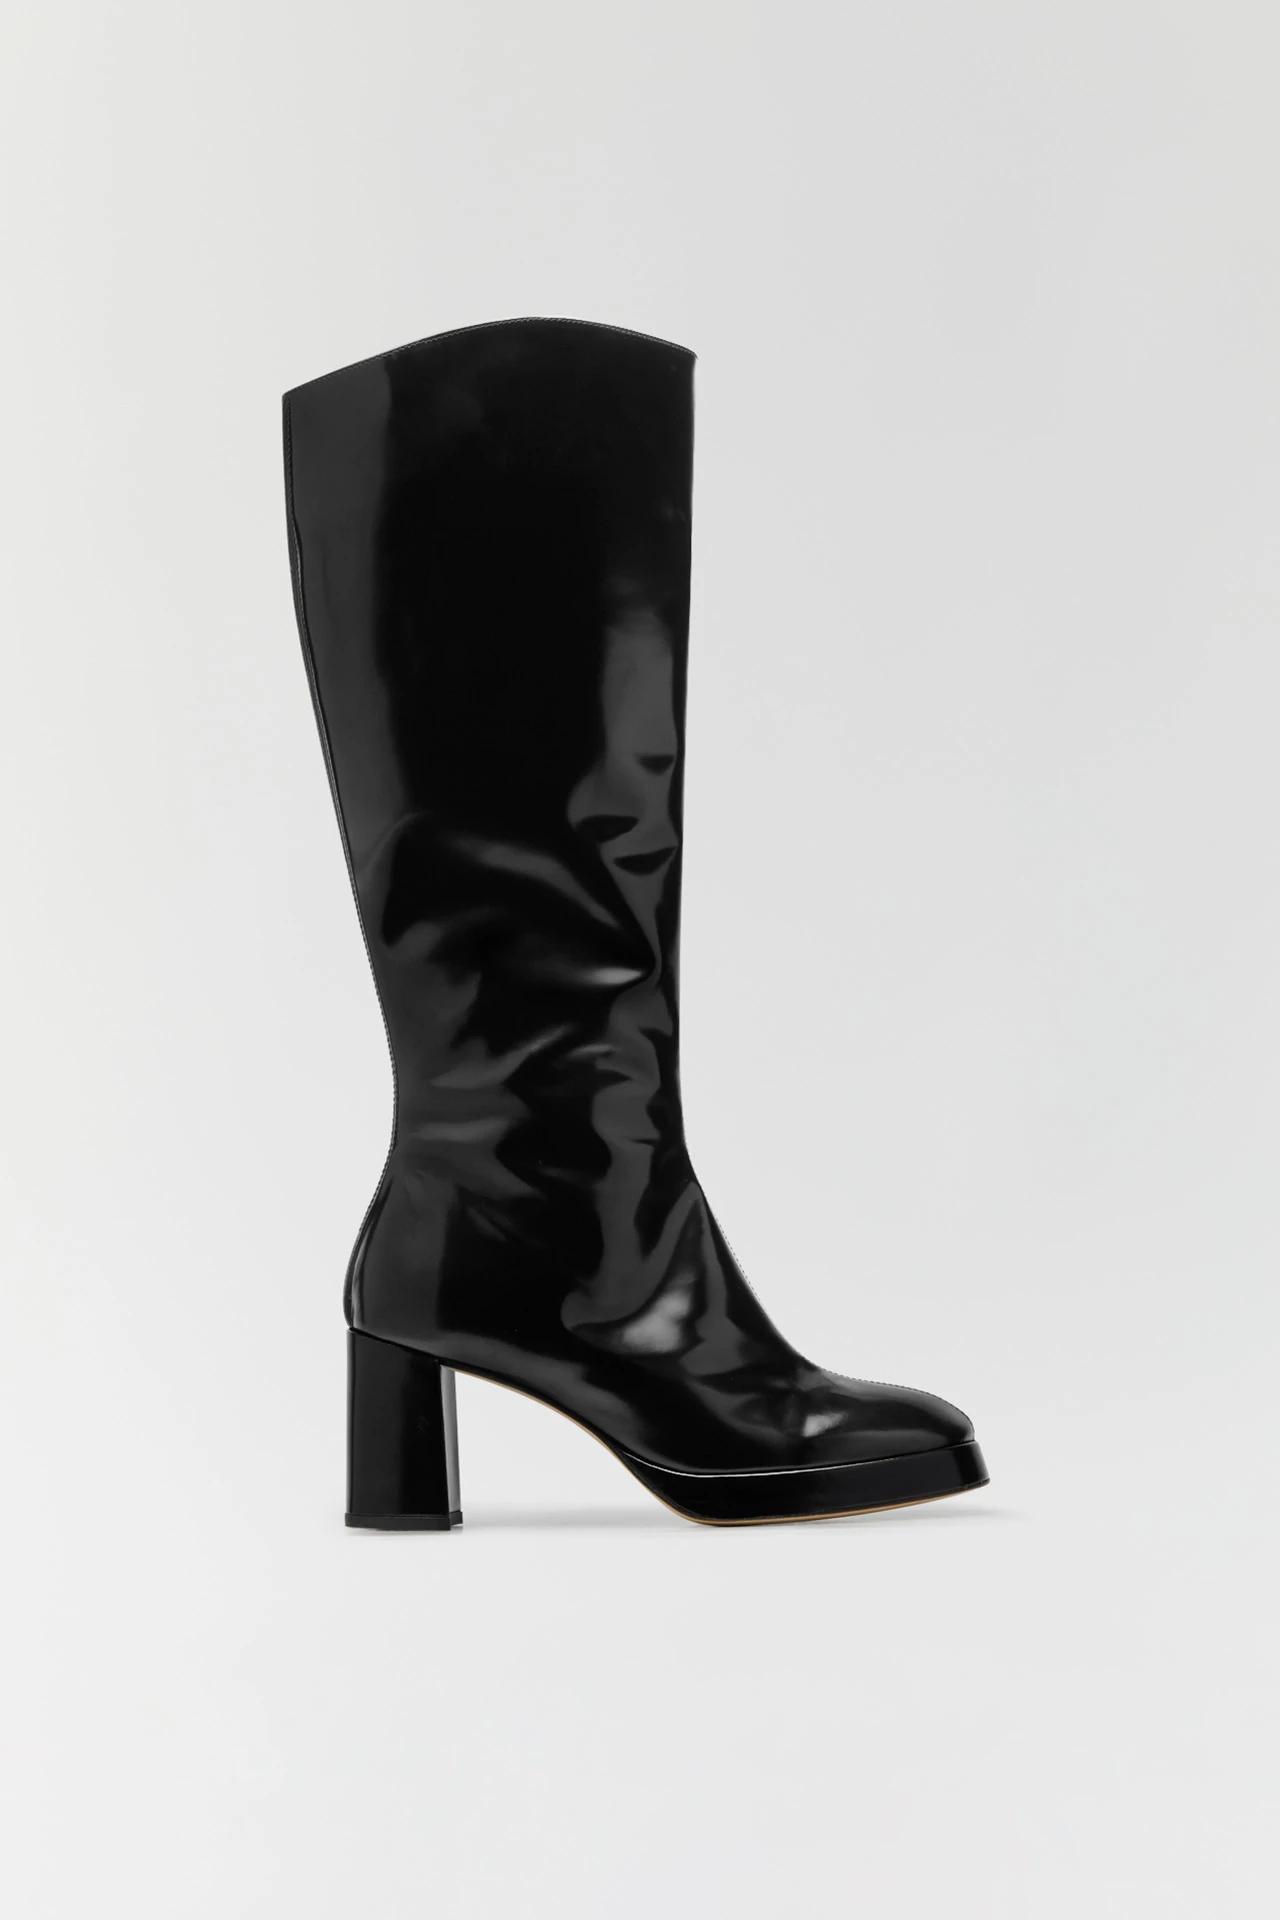 miista-eirlys-black-florentique-boots-1